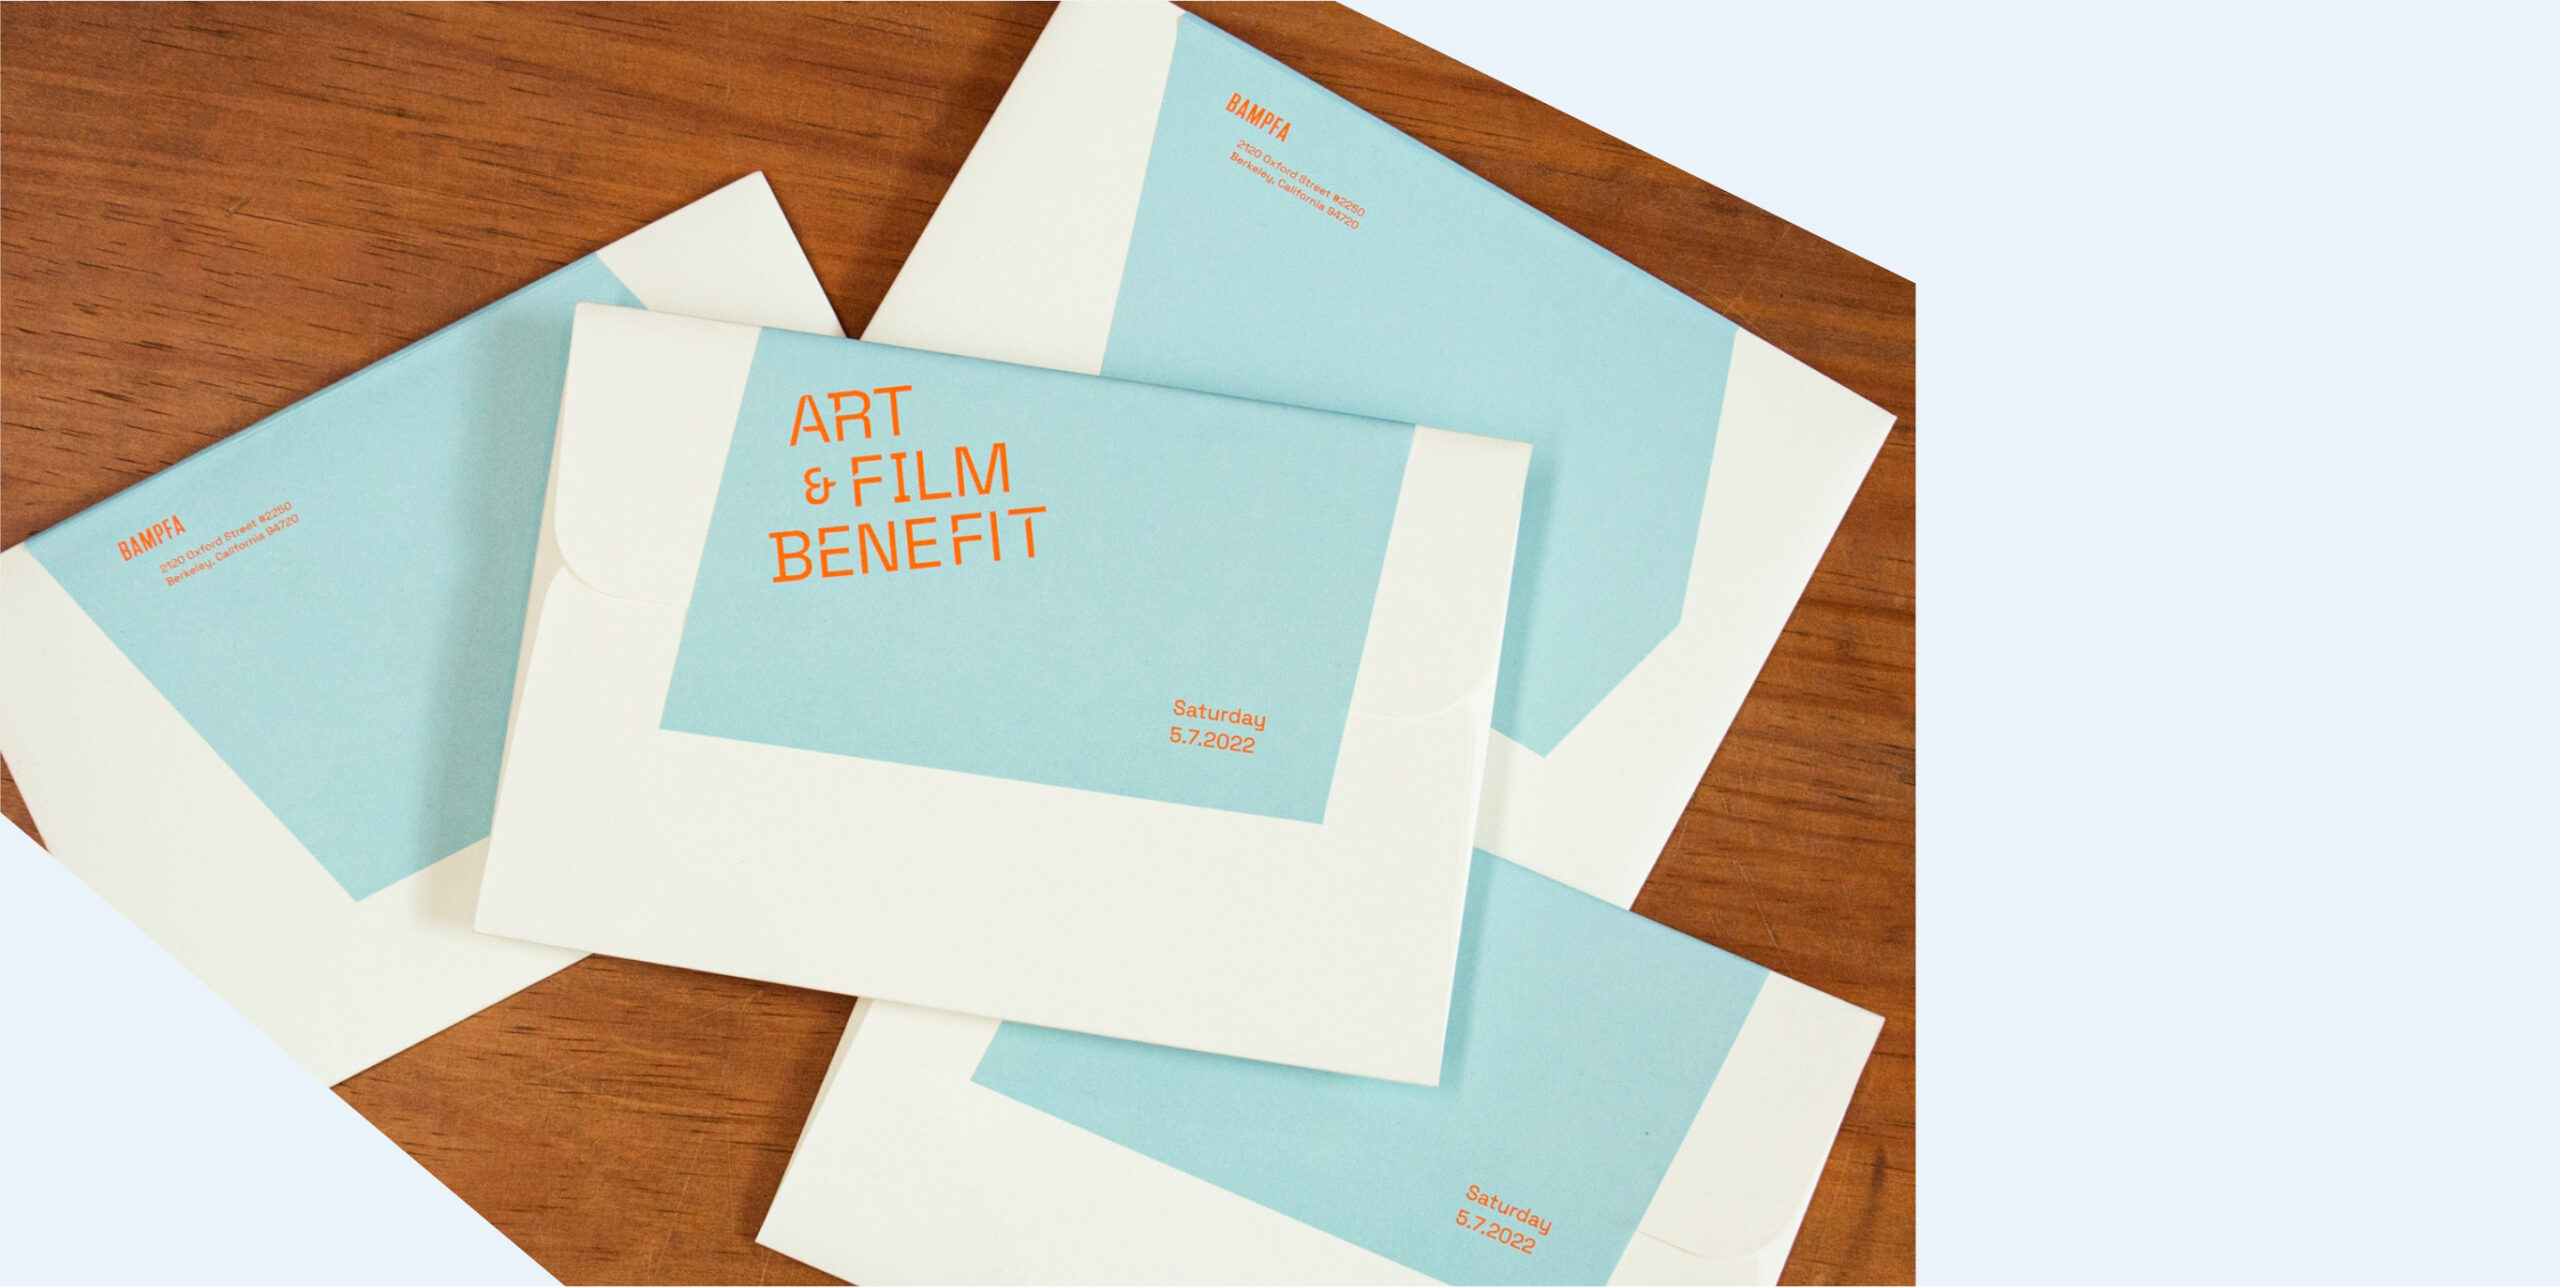 Photo of BAMPFA Art & Film Benefit event envelopes